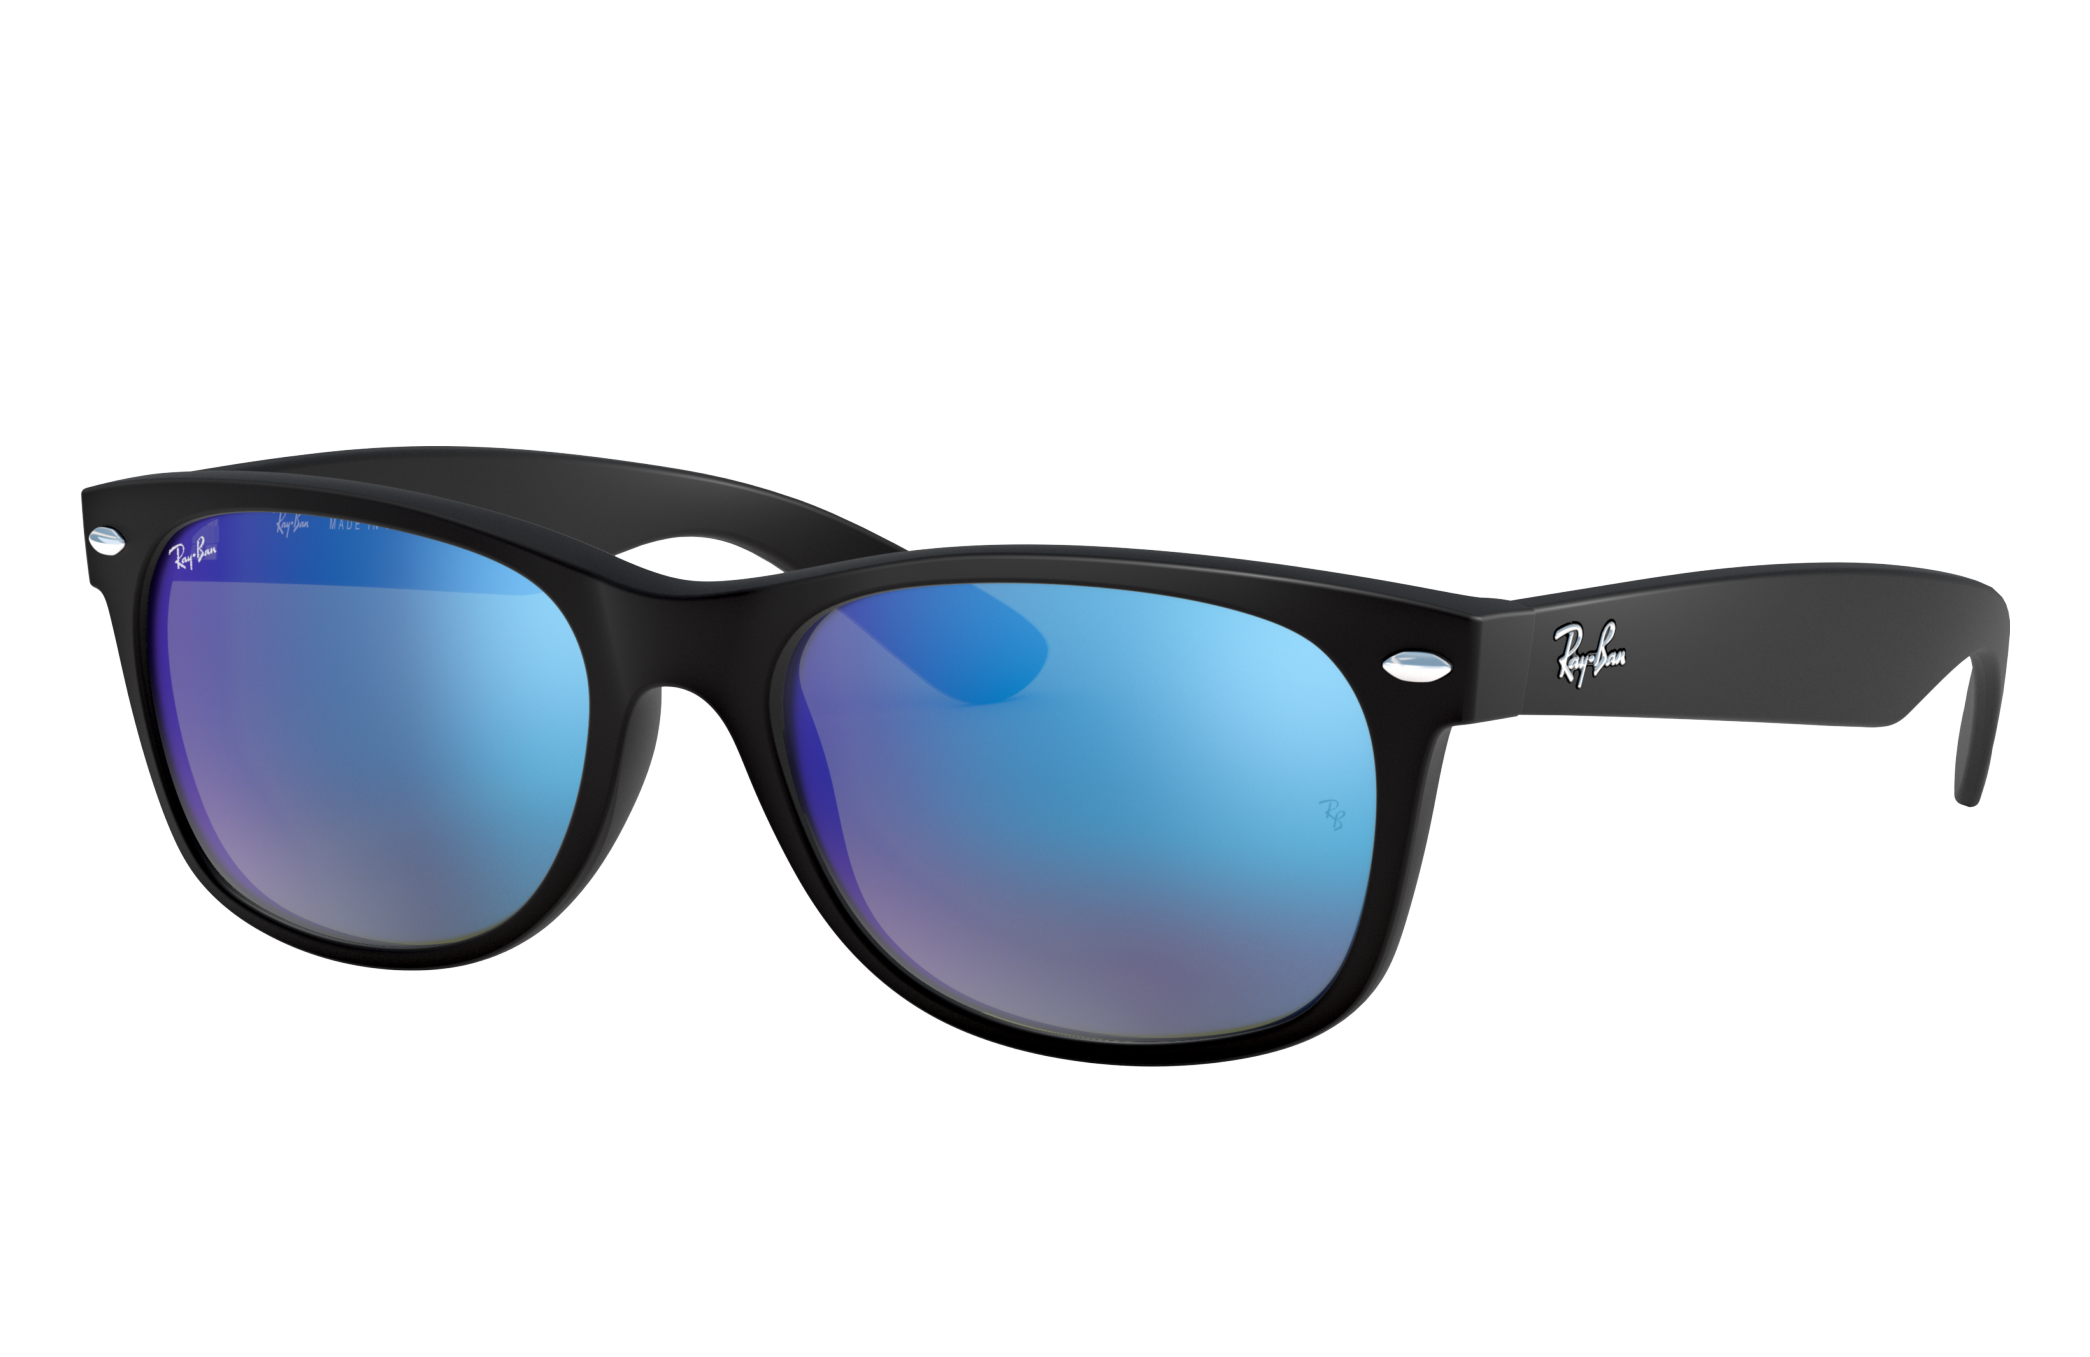 black and blue ray ban sunglasses